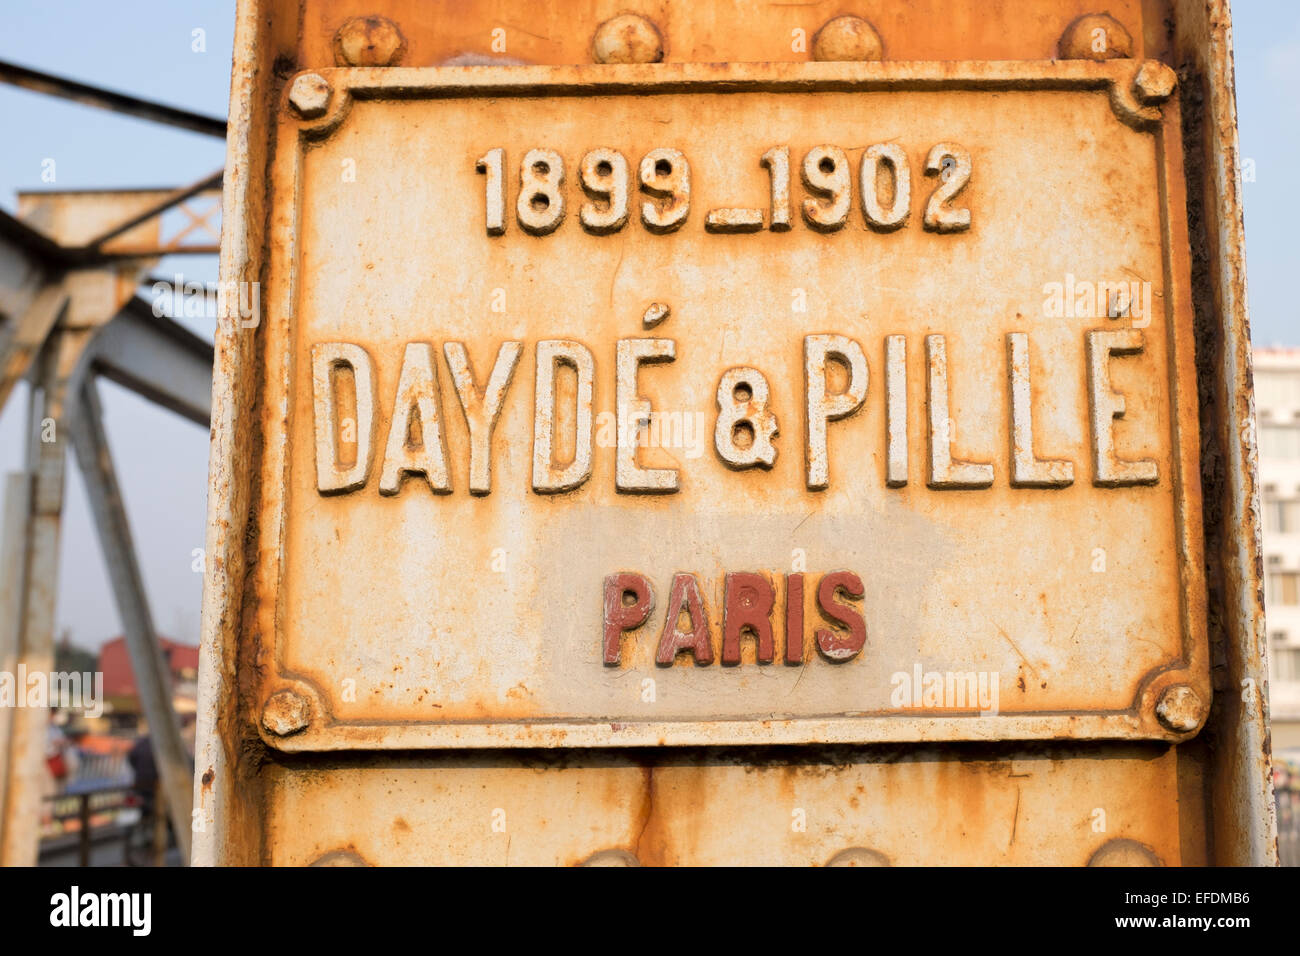 Dayde y Pille de firmar en París bien largo puente de ferrocarril Hanoi, Vietnam Foto de stock